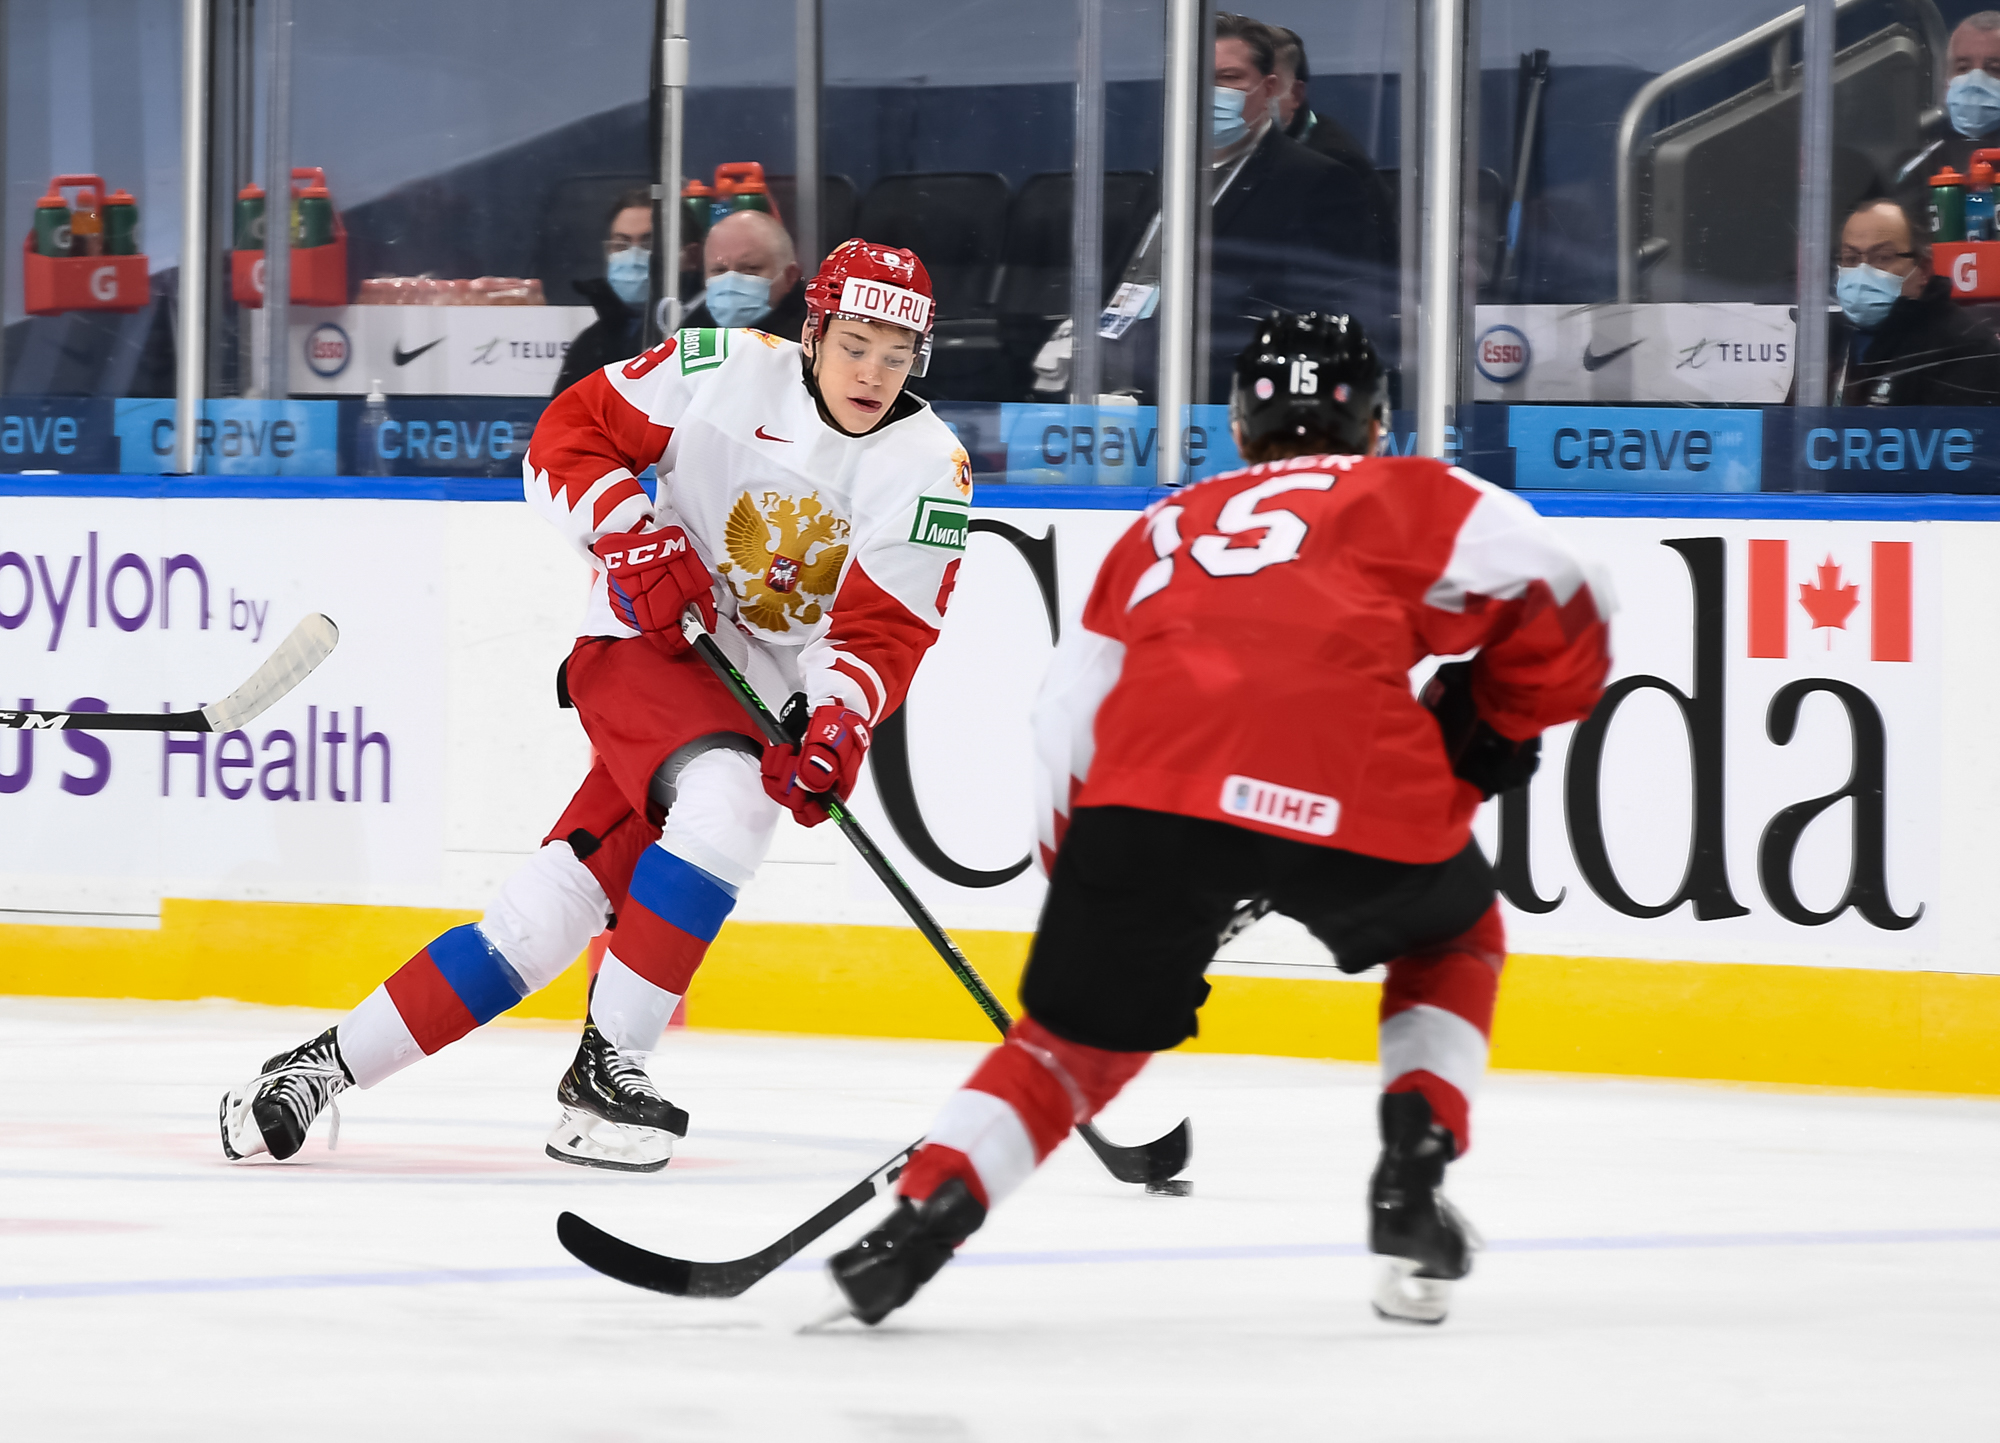 IIHF - Gallery: Austria vs Russia - 2021 IIHF World Junior Championship